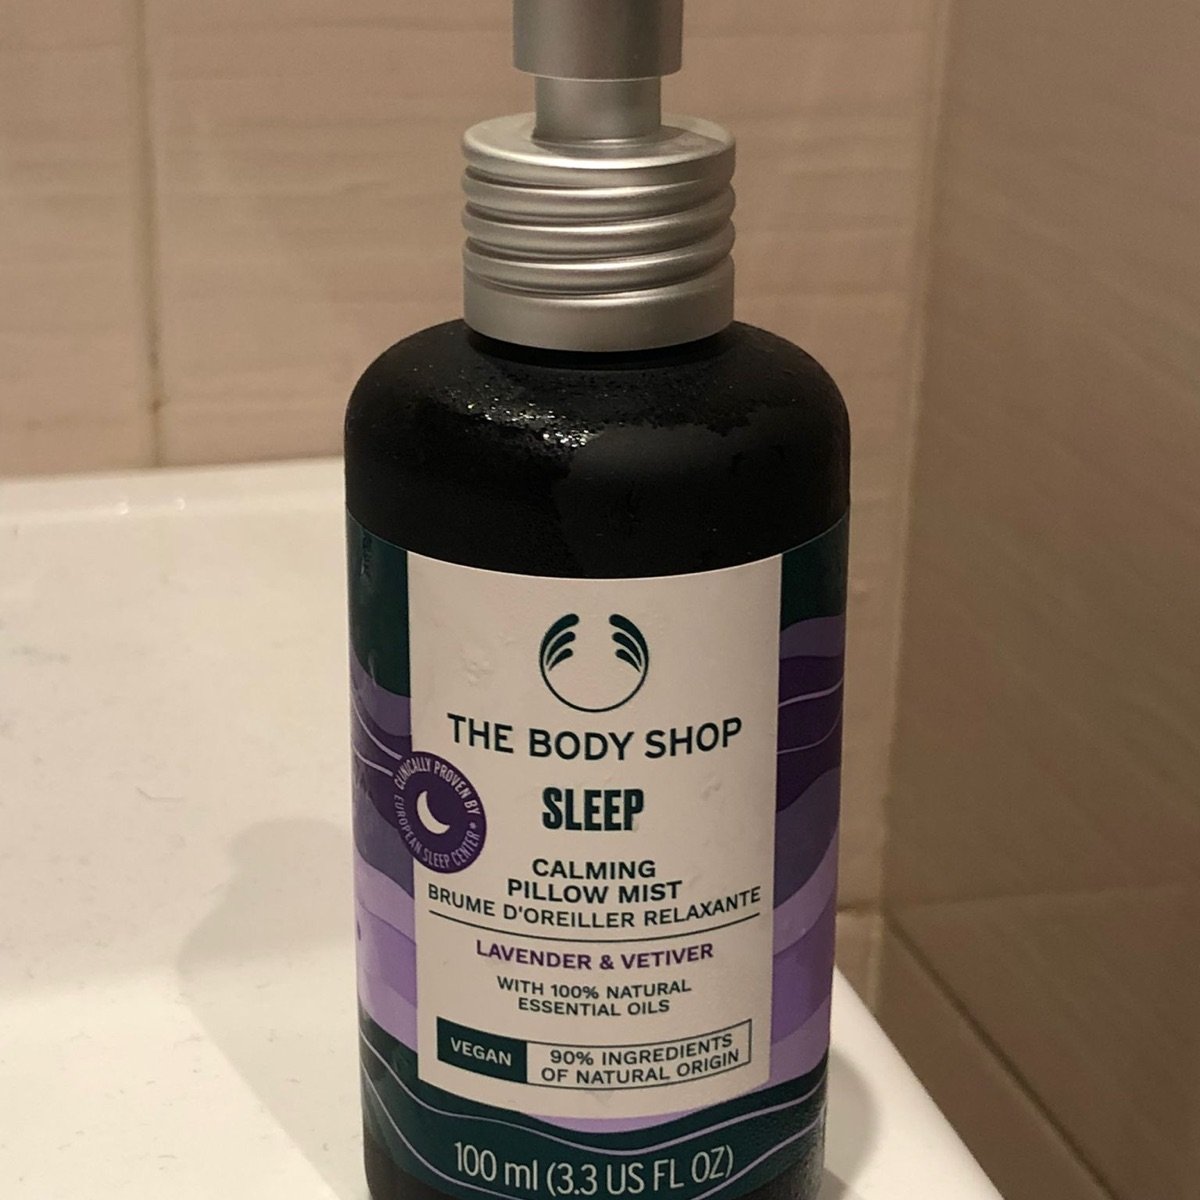 The Body Shop Sleep - Calming Pillow Mist (Lavender & Vetiver) Review |  abillion